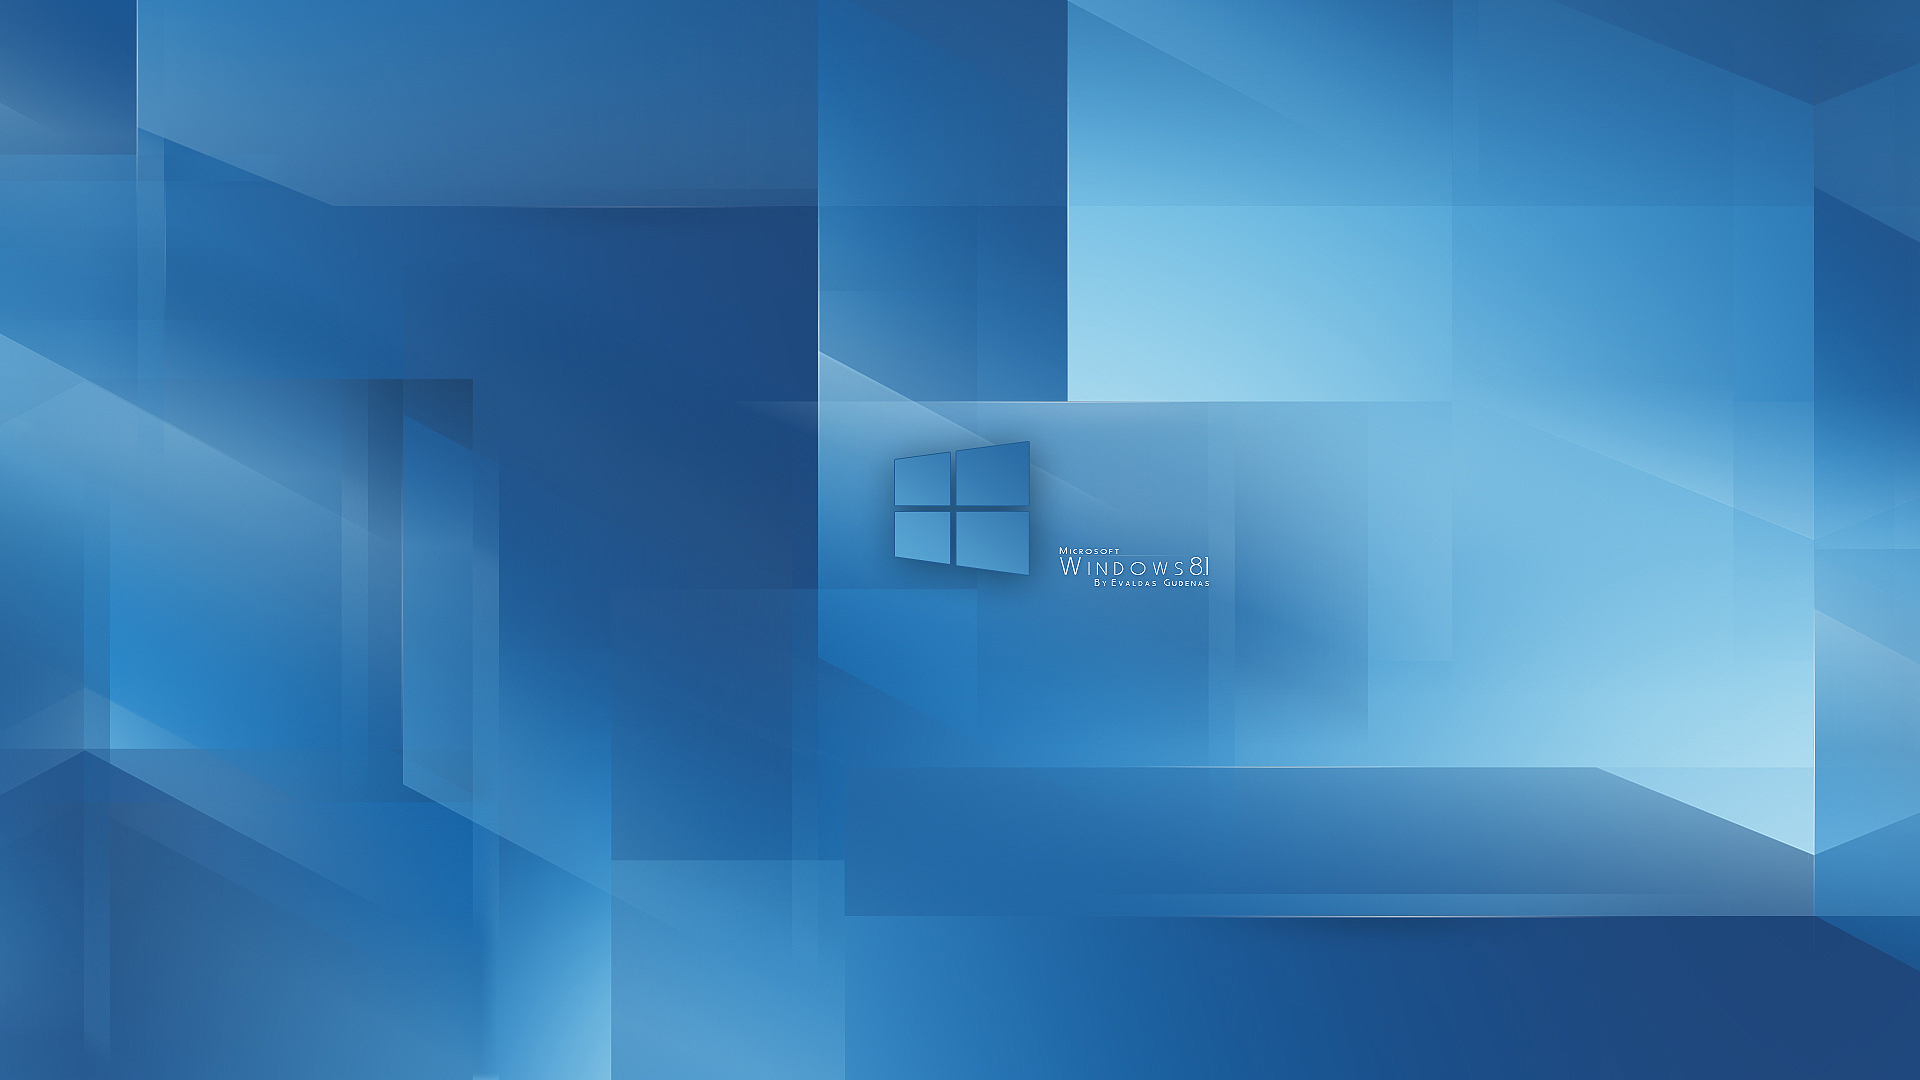 Windows 8.1 HD 1080P Backgrounds